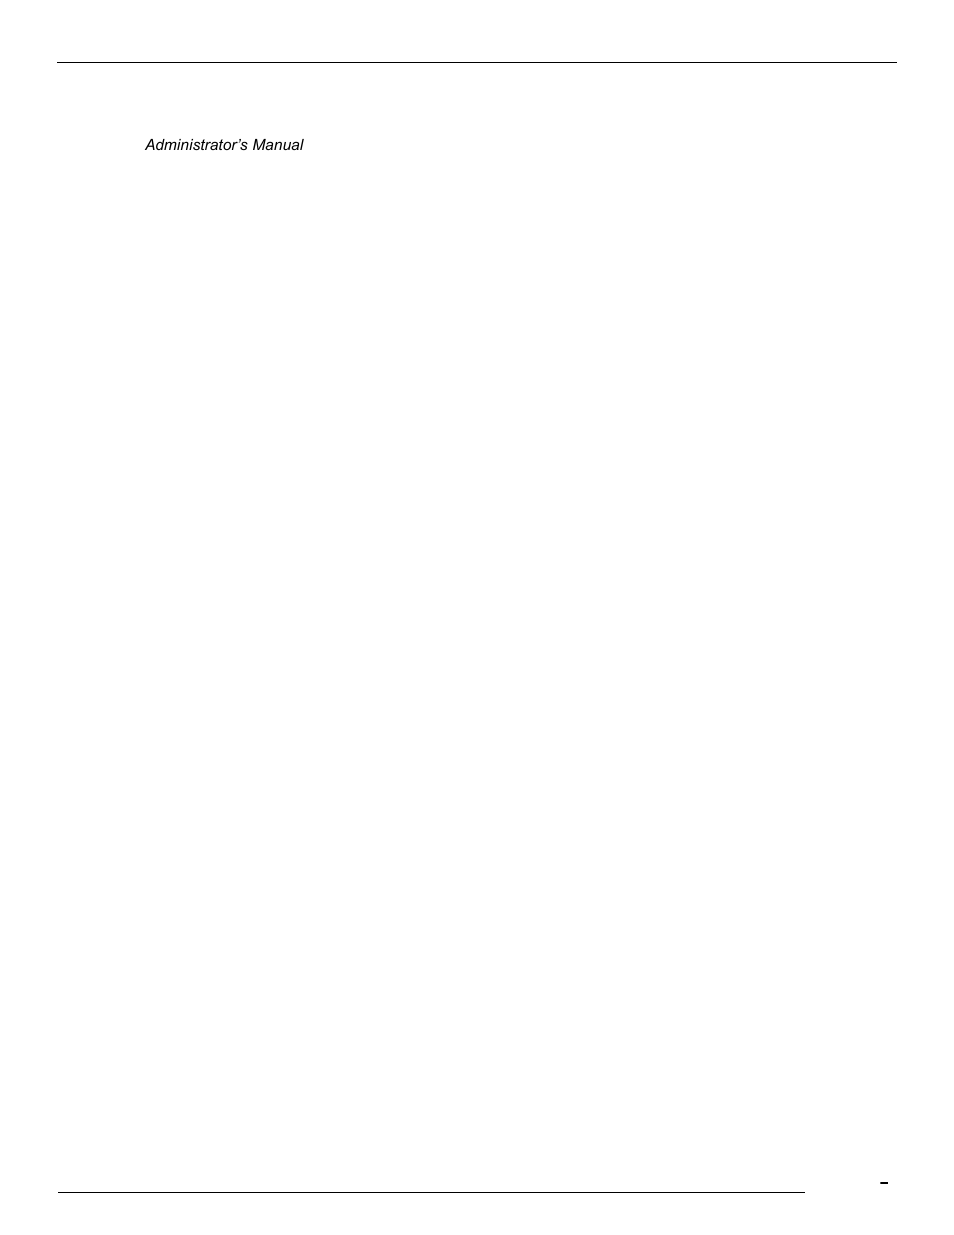 Kofax Communication Server 9.1.1 User Manual | Page 97 / 114